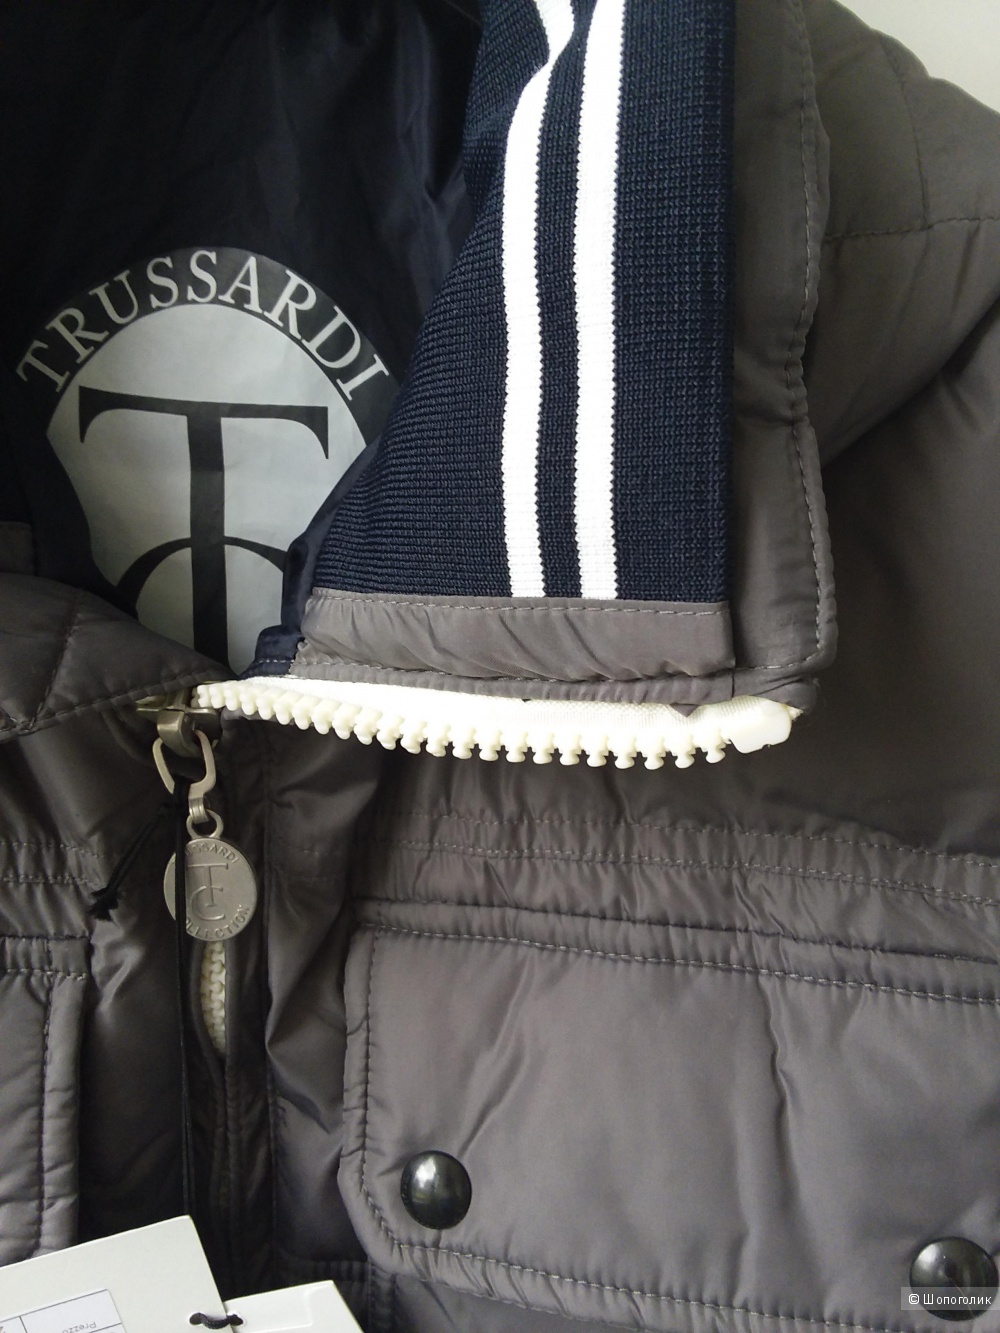 Мужская куртка Trussardi Collection на 46 размер